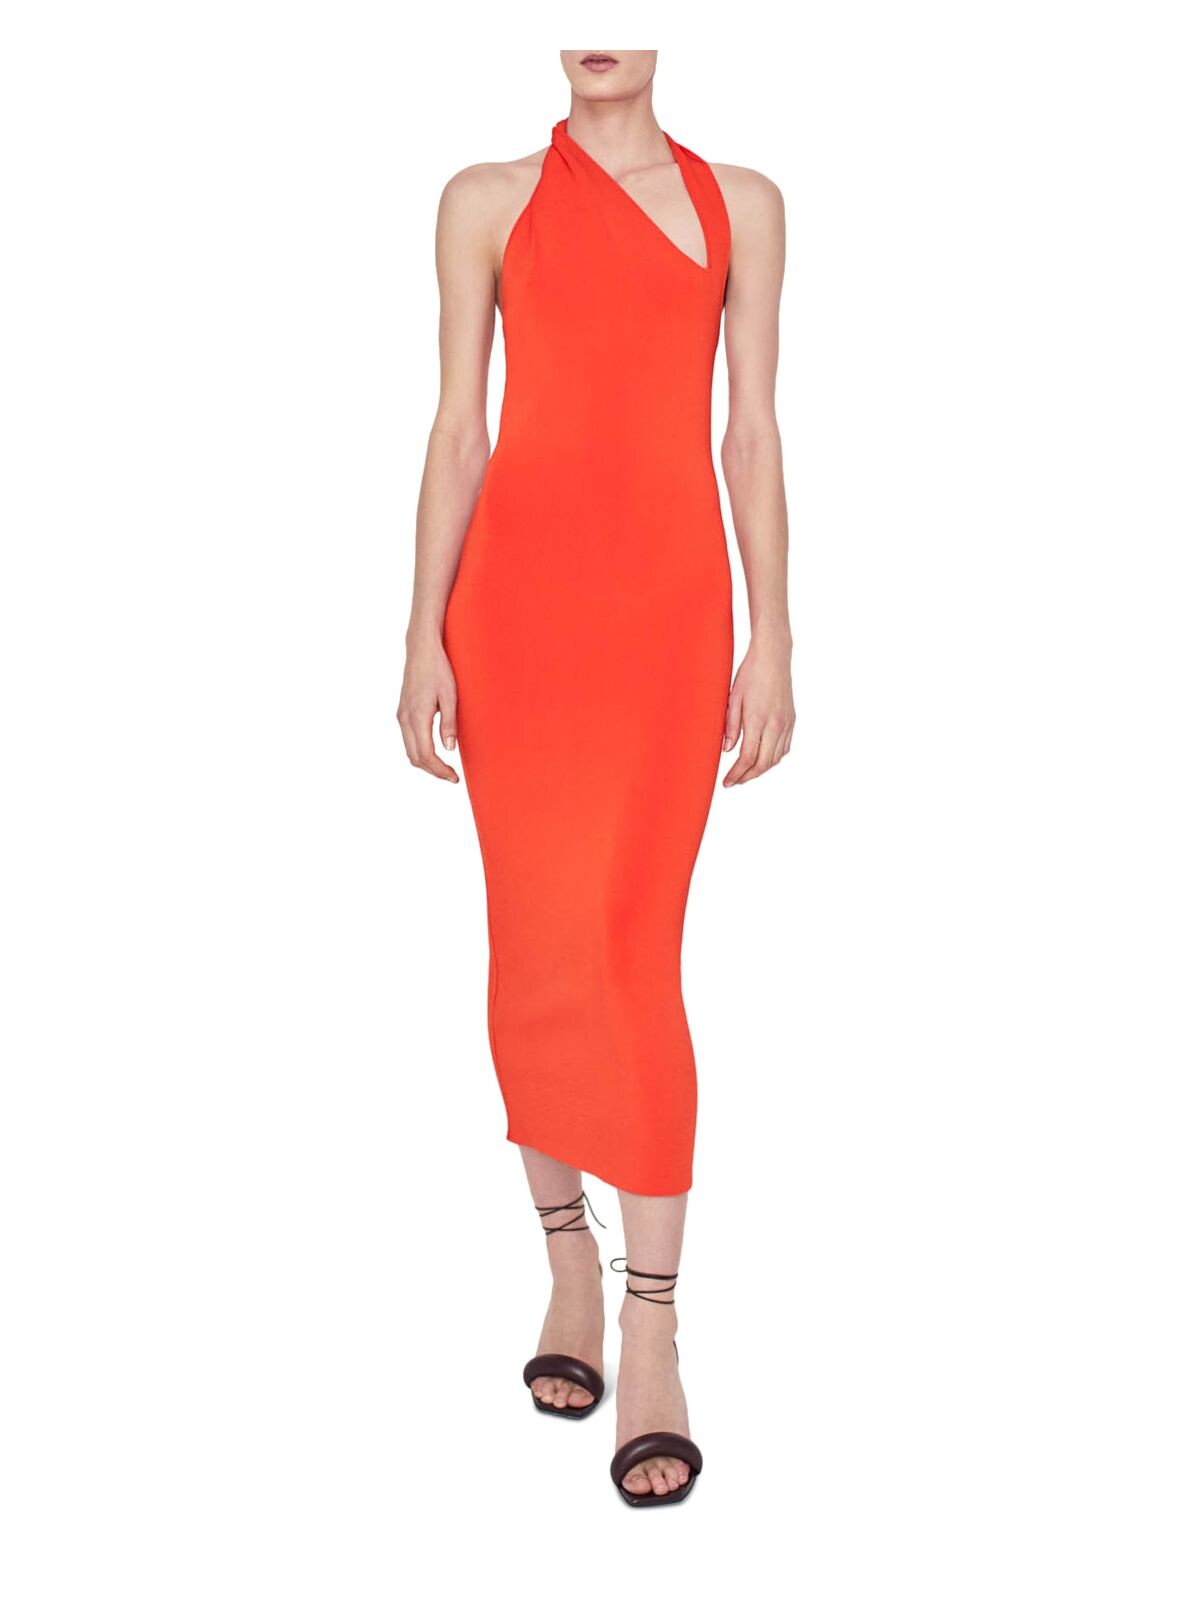 GALVAN LONDON Womens Orange Textured Open Back Unlined Pullover Cutout Sleeveless Asymmetrical Neckline Midi Cocktail Body Con Dress S